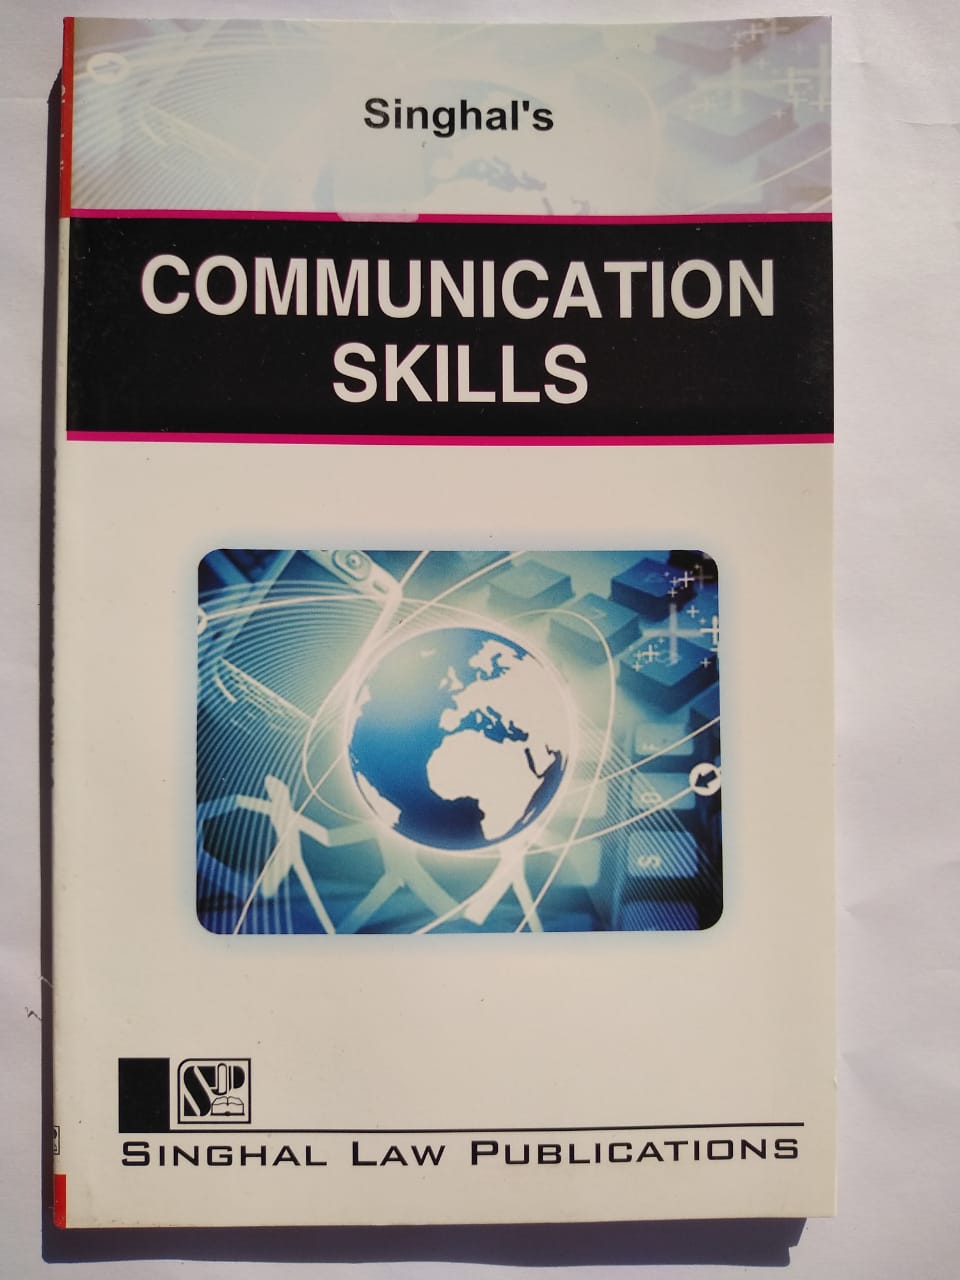 Singhal's Communication Skills